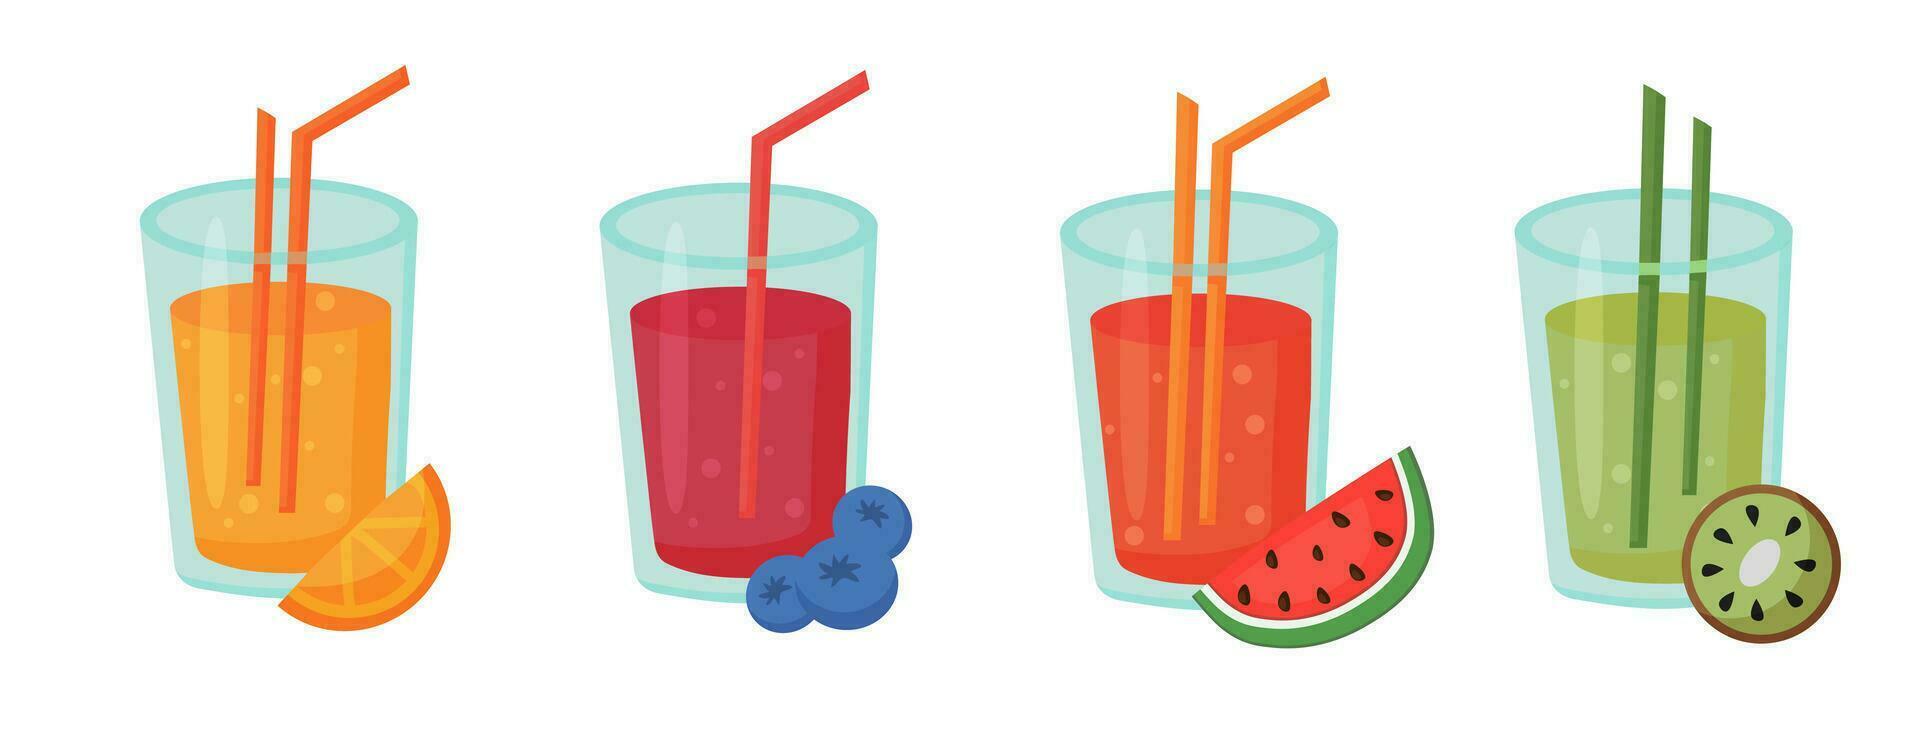 Fruta cócteles con pajitas colocar. naranja, sandía, arándano, kiwi jugo. Fresco verano beber. vector ilustración.